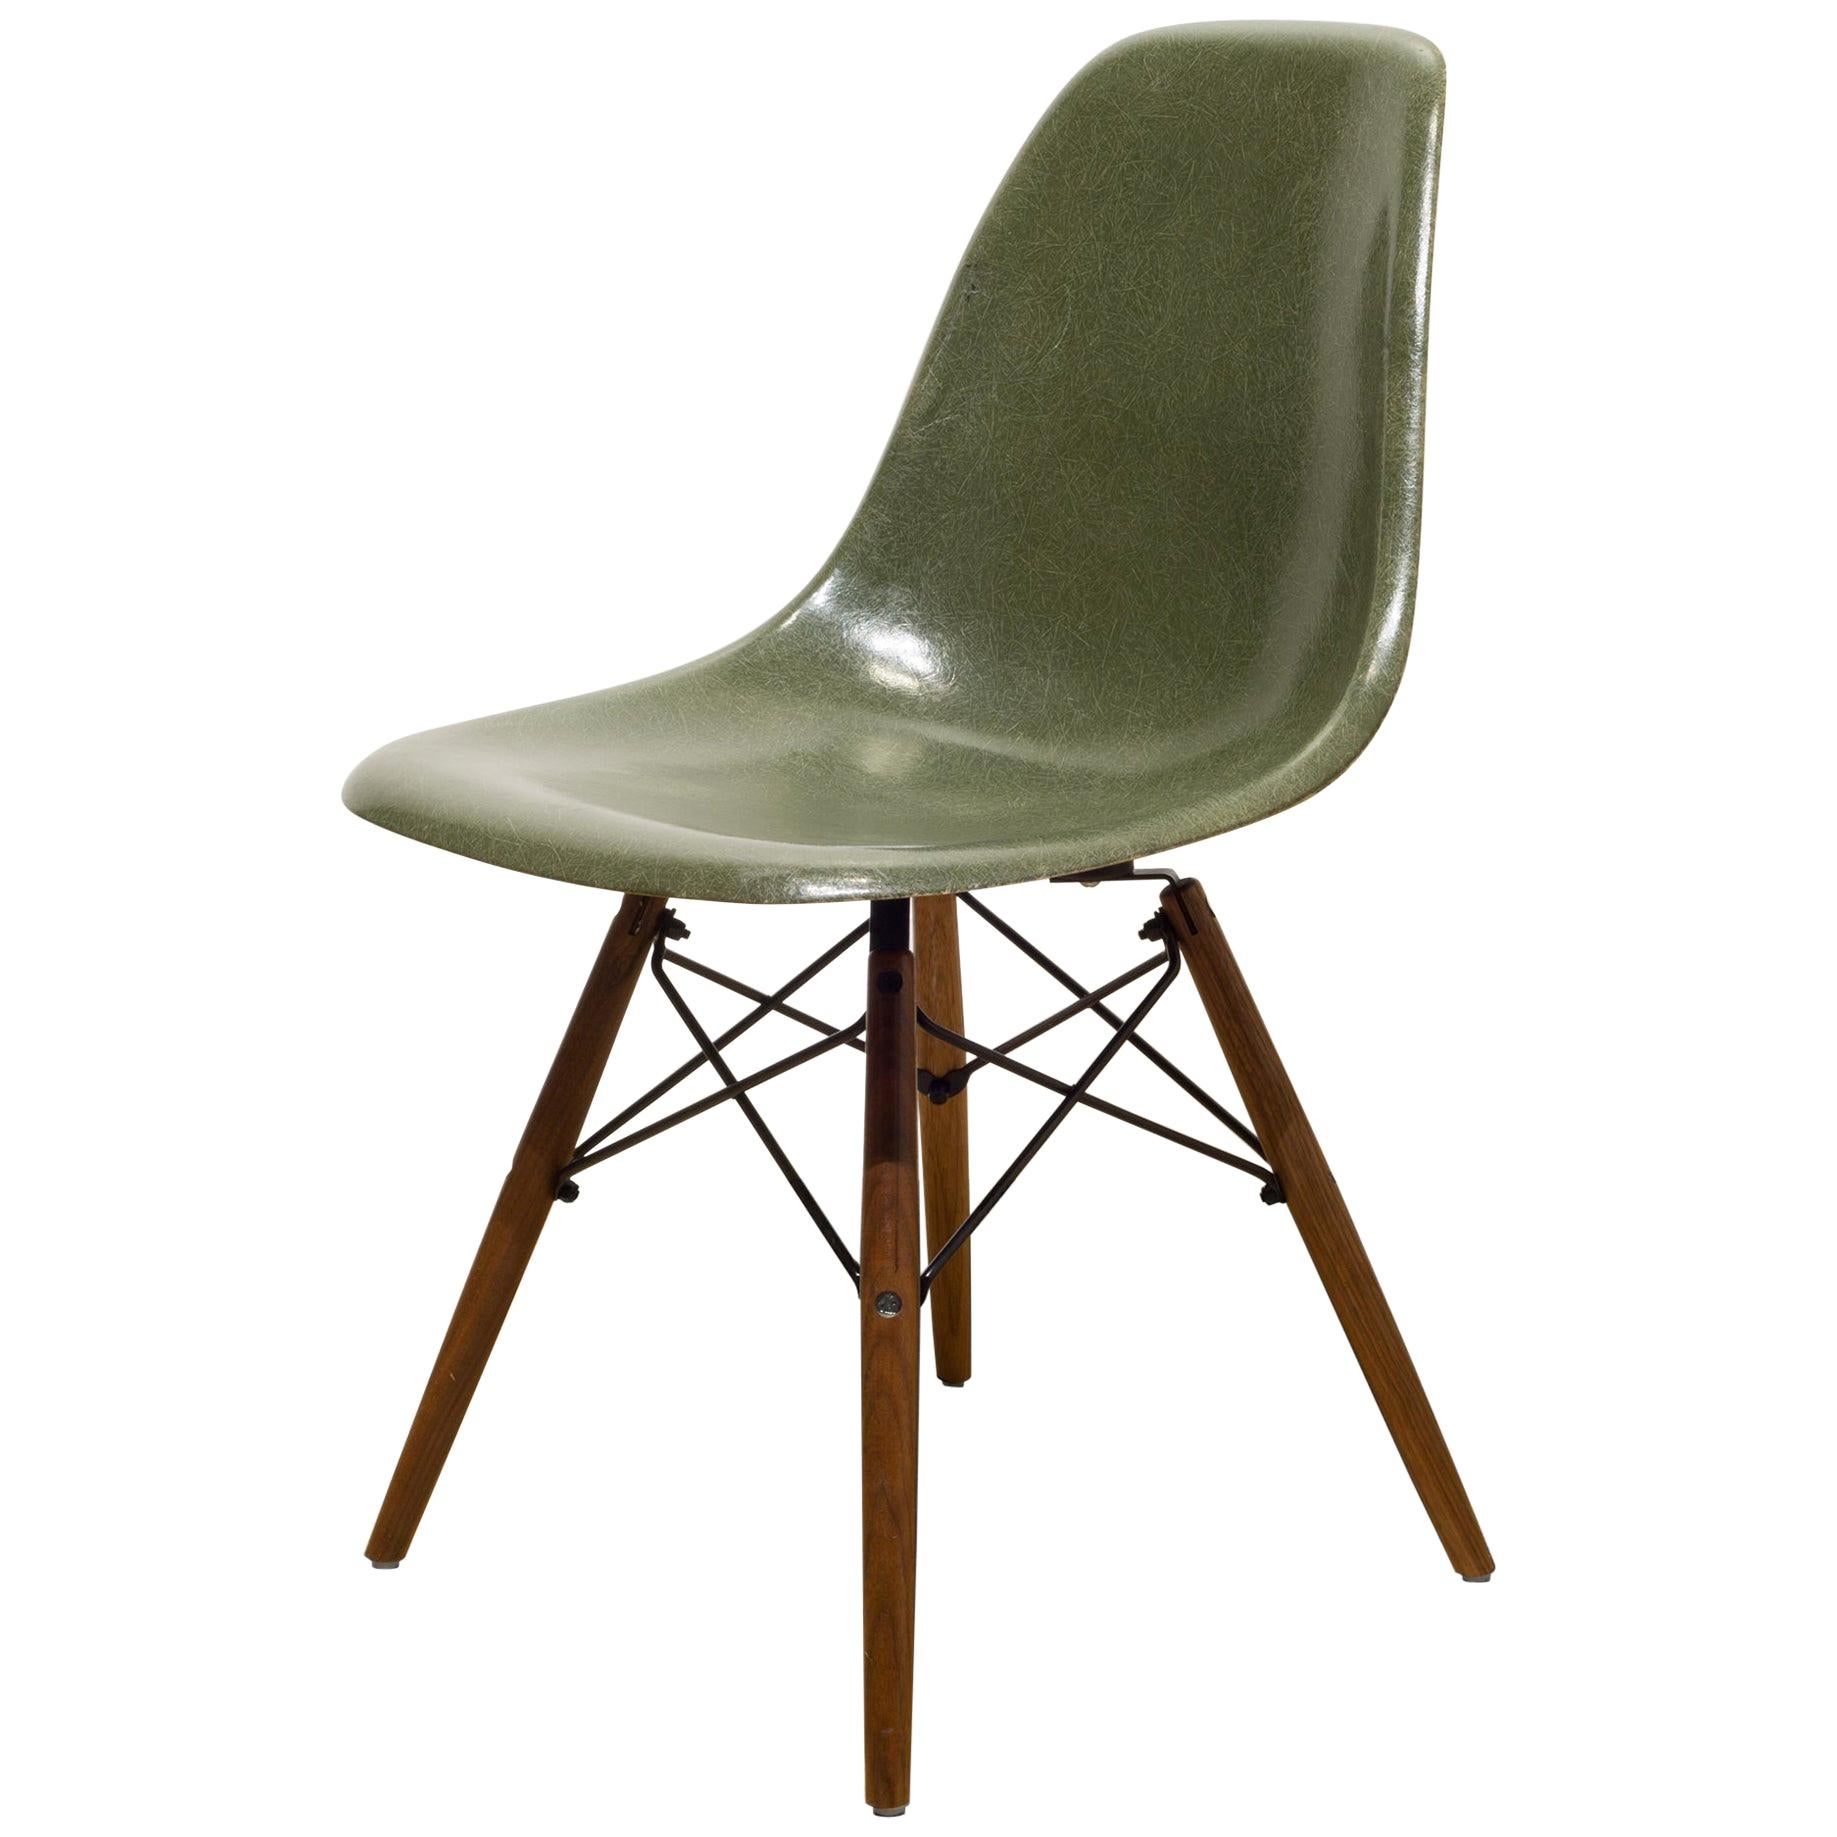 Eames for Herman Miller Fiberglass Shell Chair in Sea Foam Green , c. 1958-1965